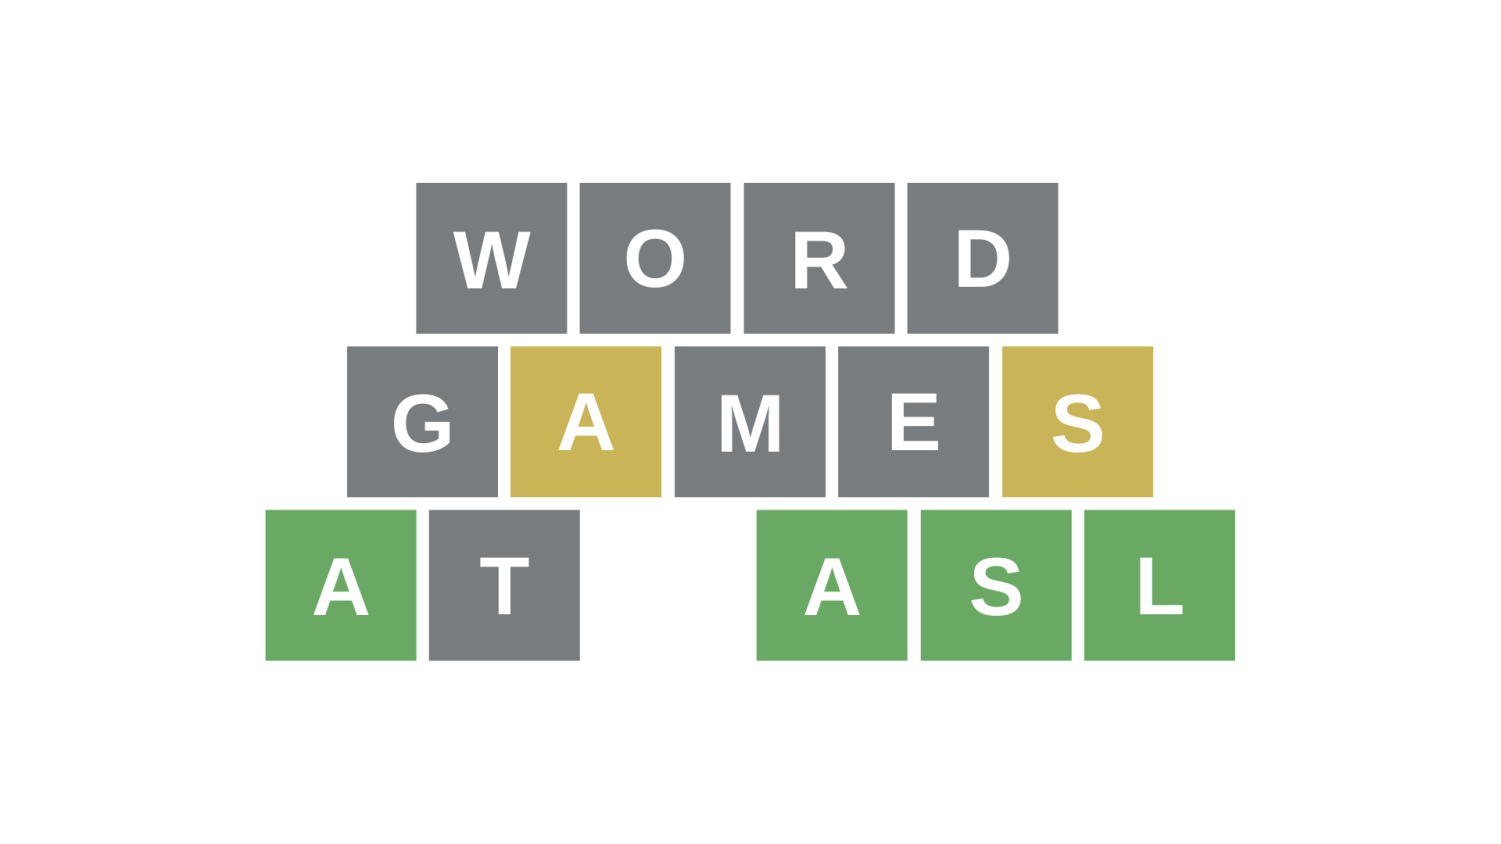 Global word games popularity strikes community